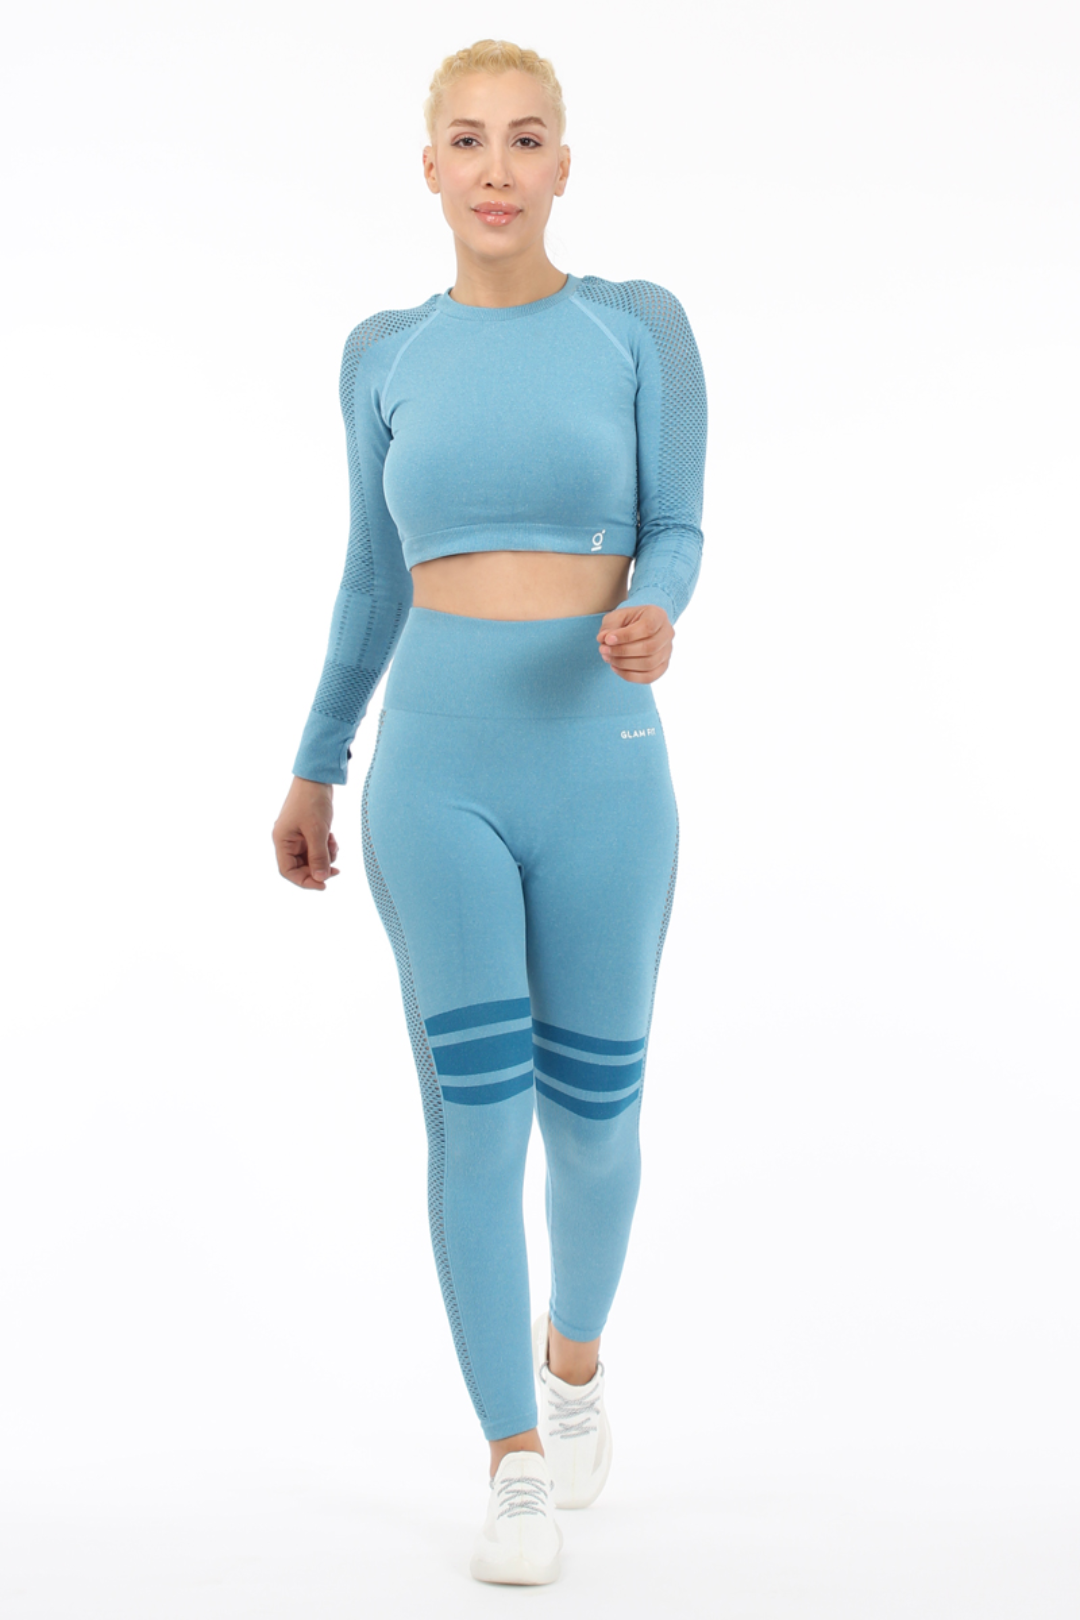 Women Seamless Workout Outfits Sport Long Sleeve And Legging Blue Net